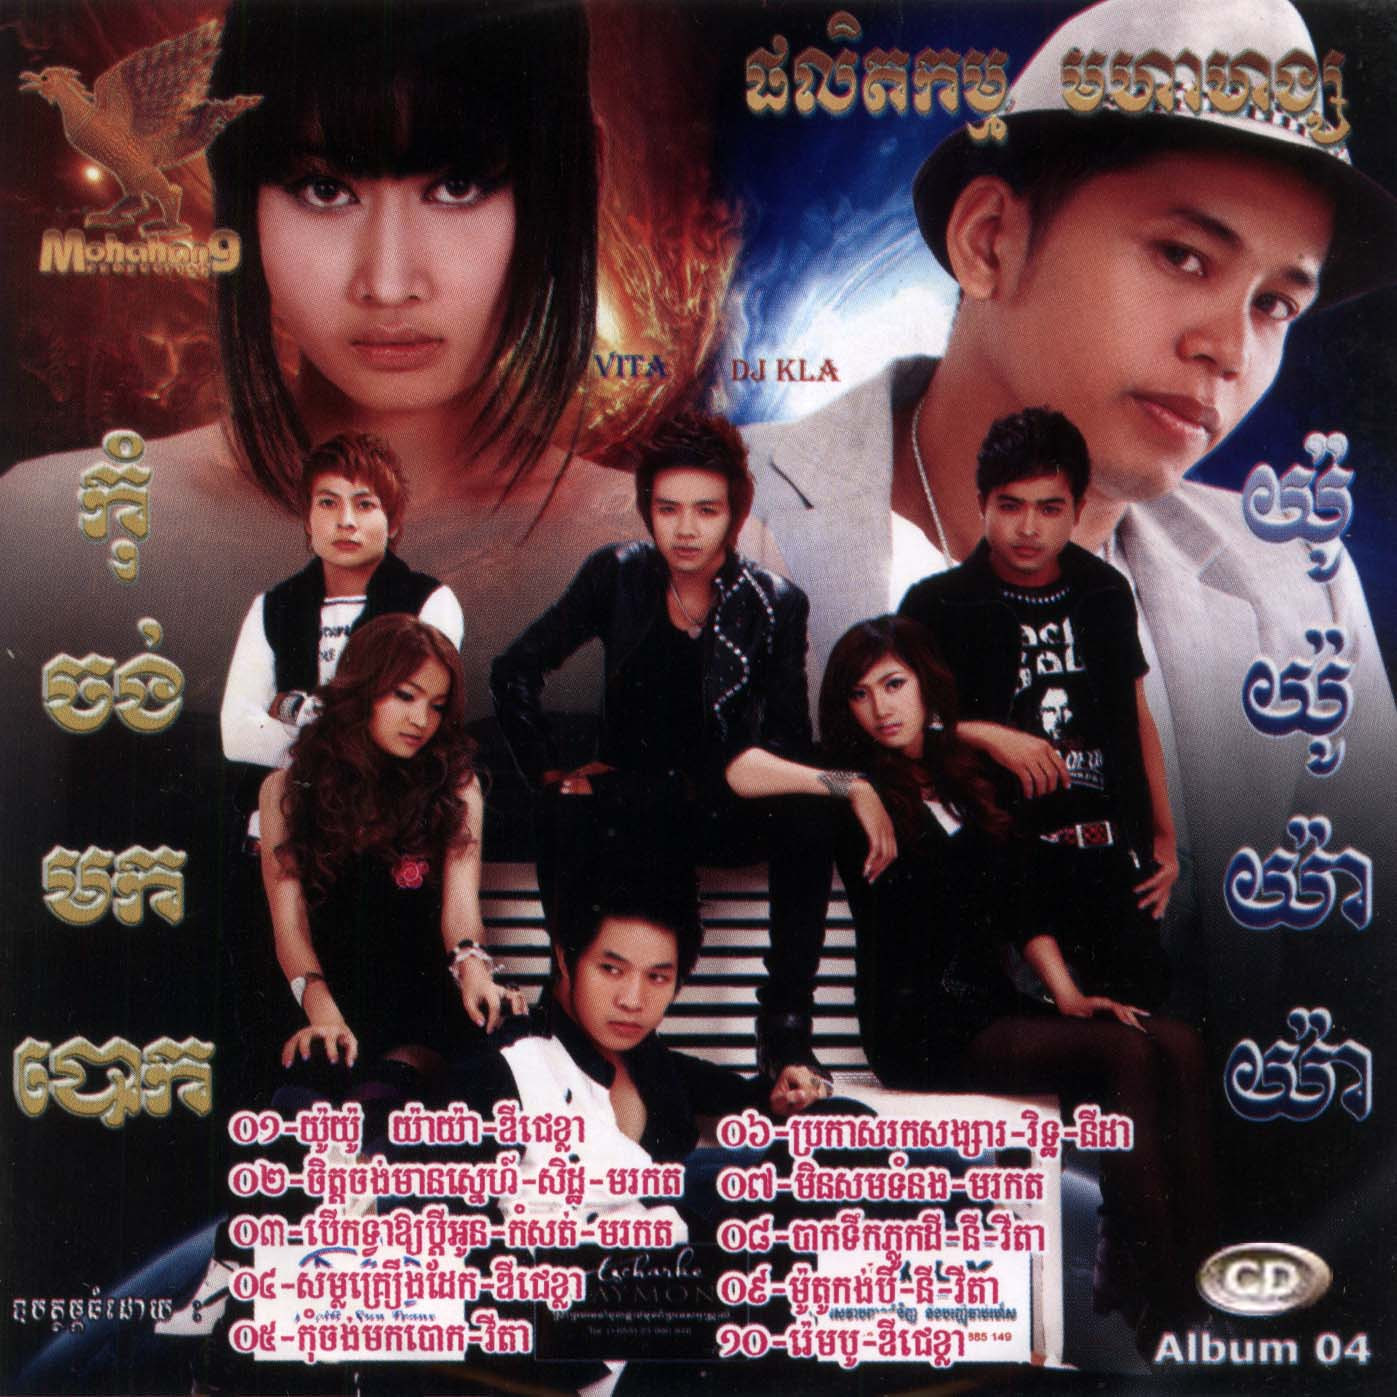 Mohahang CD VOL 04